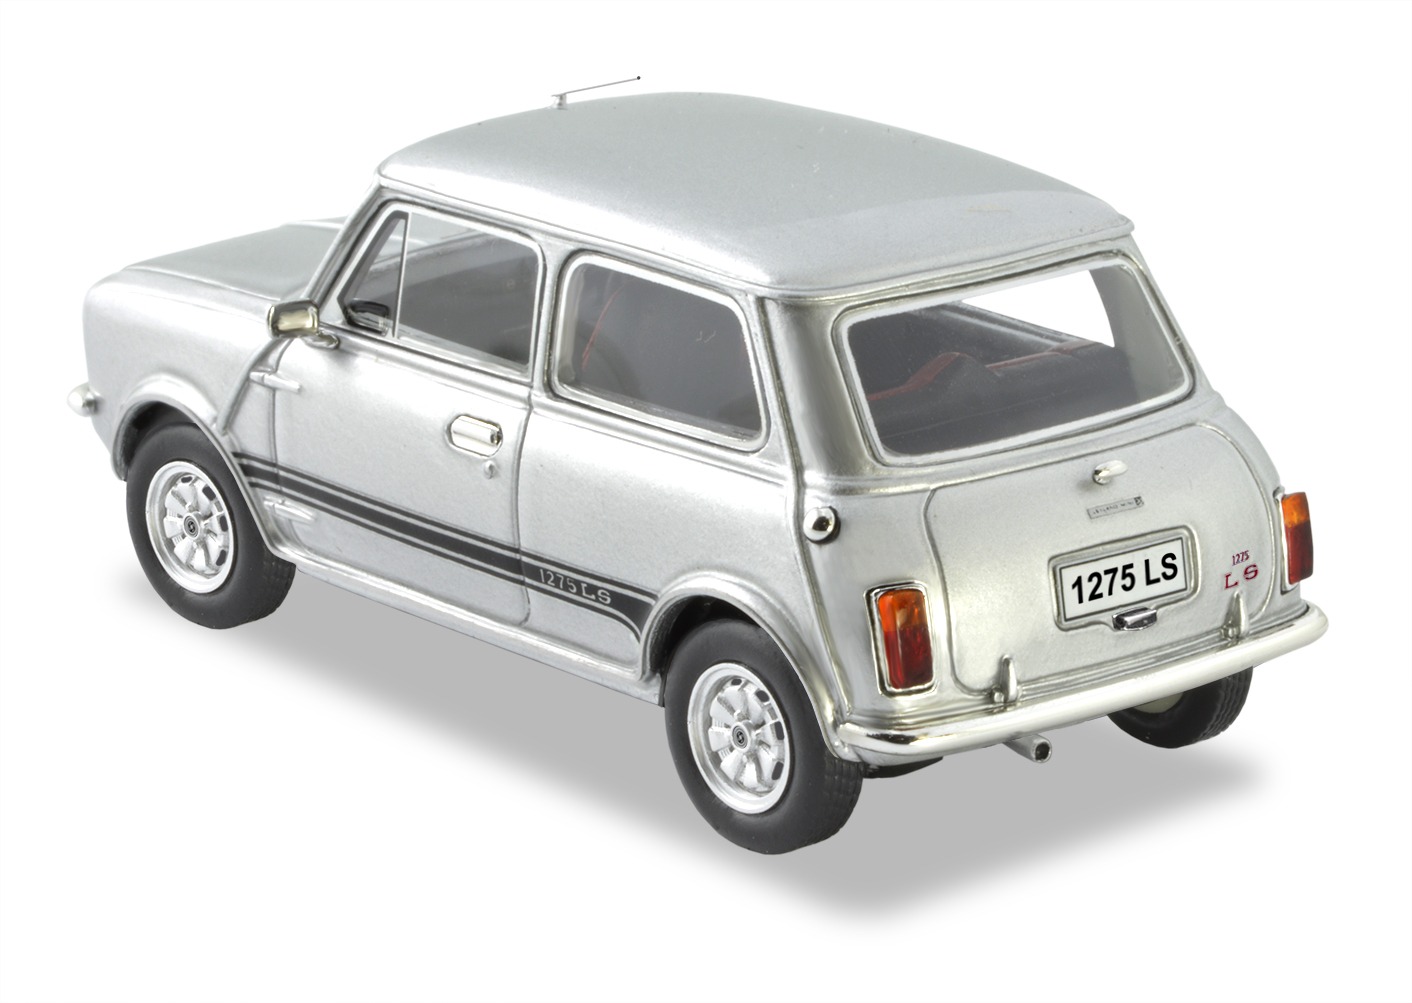 1978 Leyland Mini LS 1275 – Hi Ho Silver